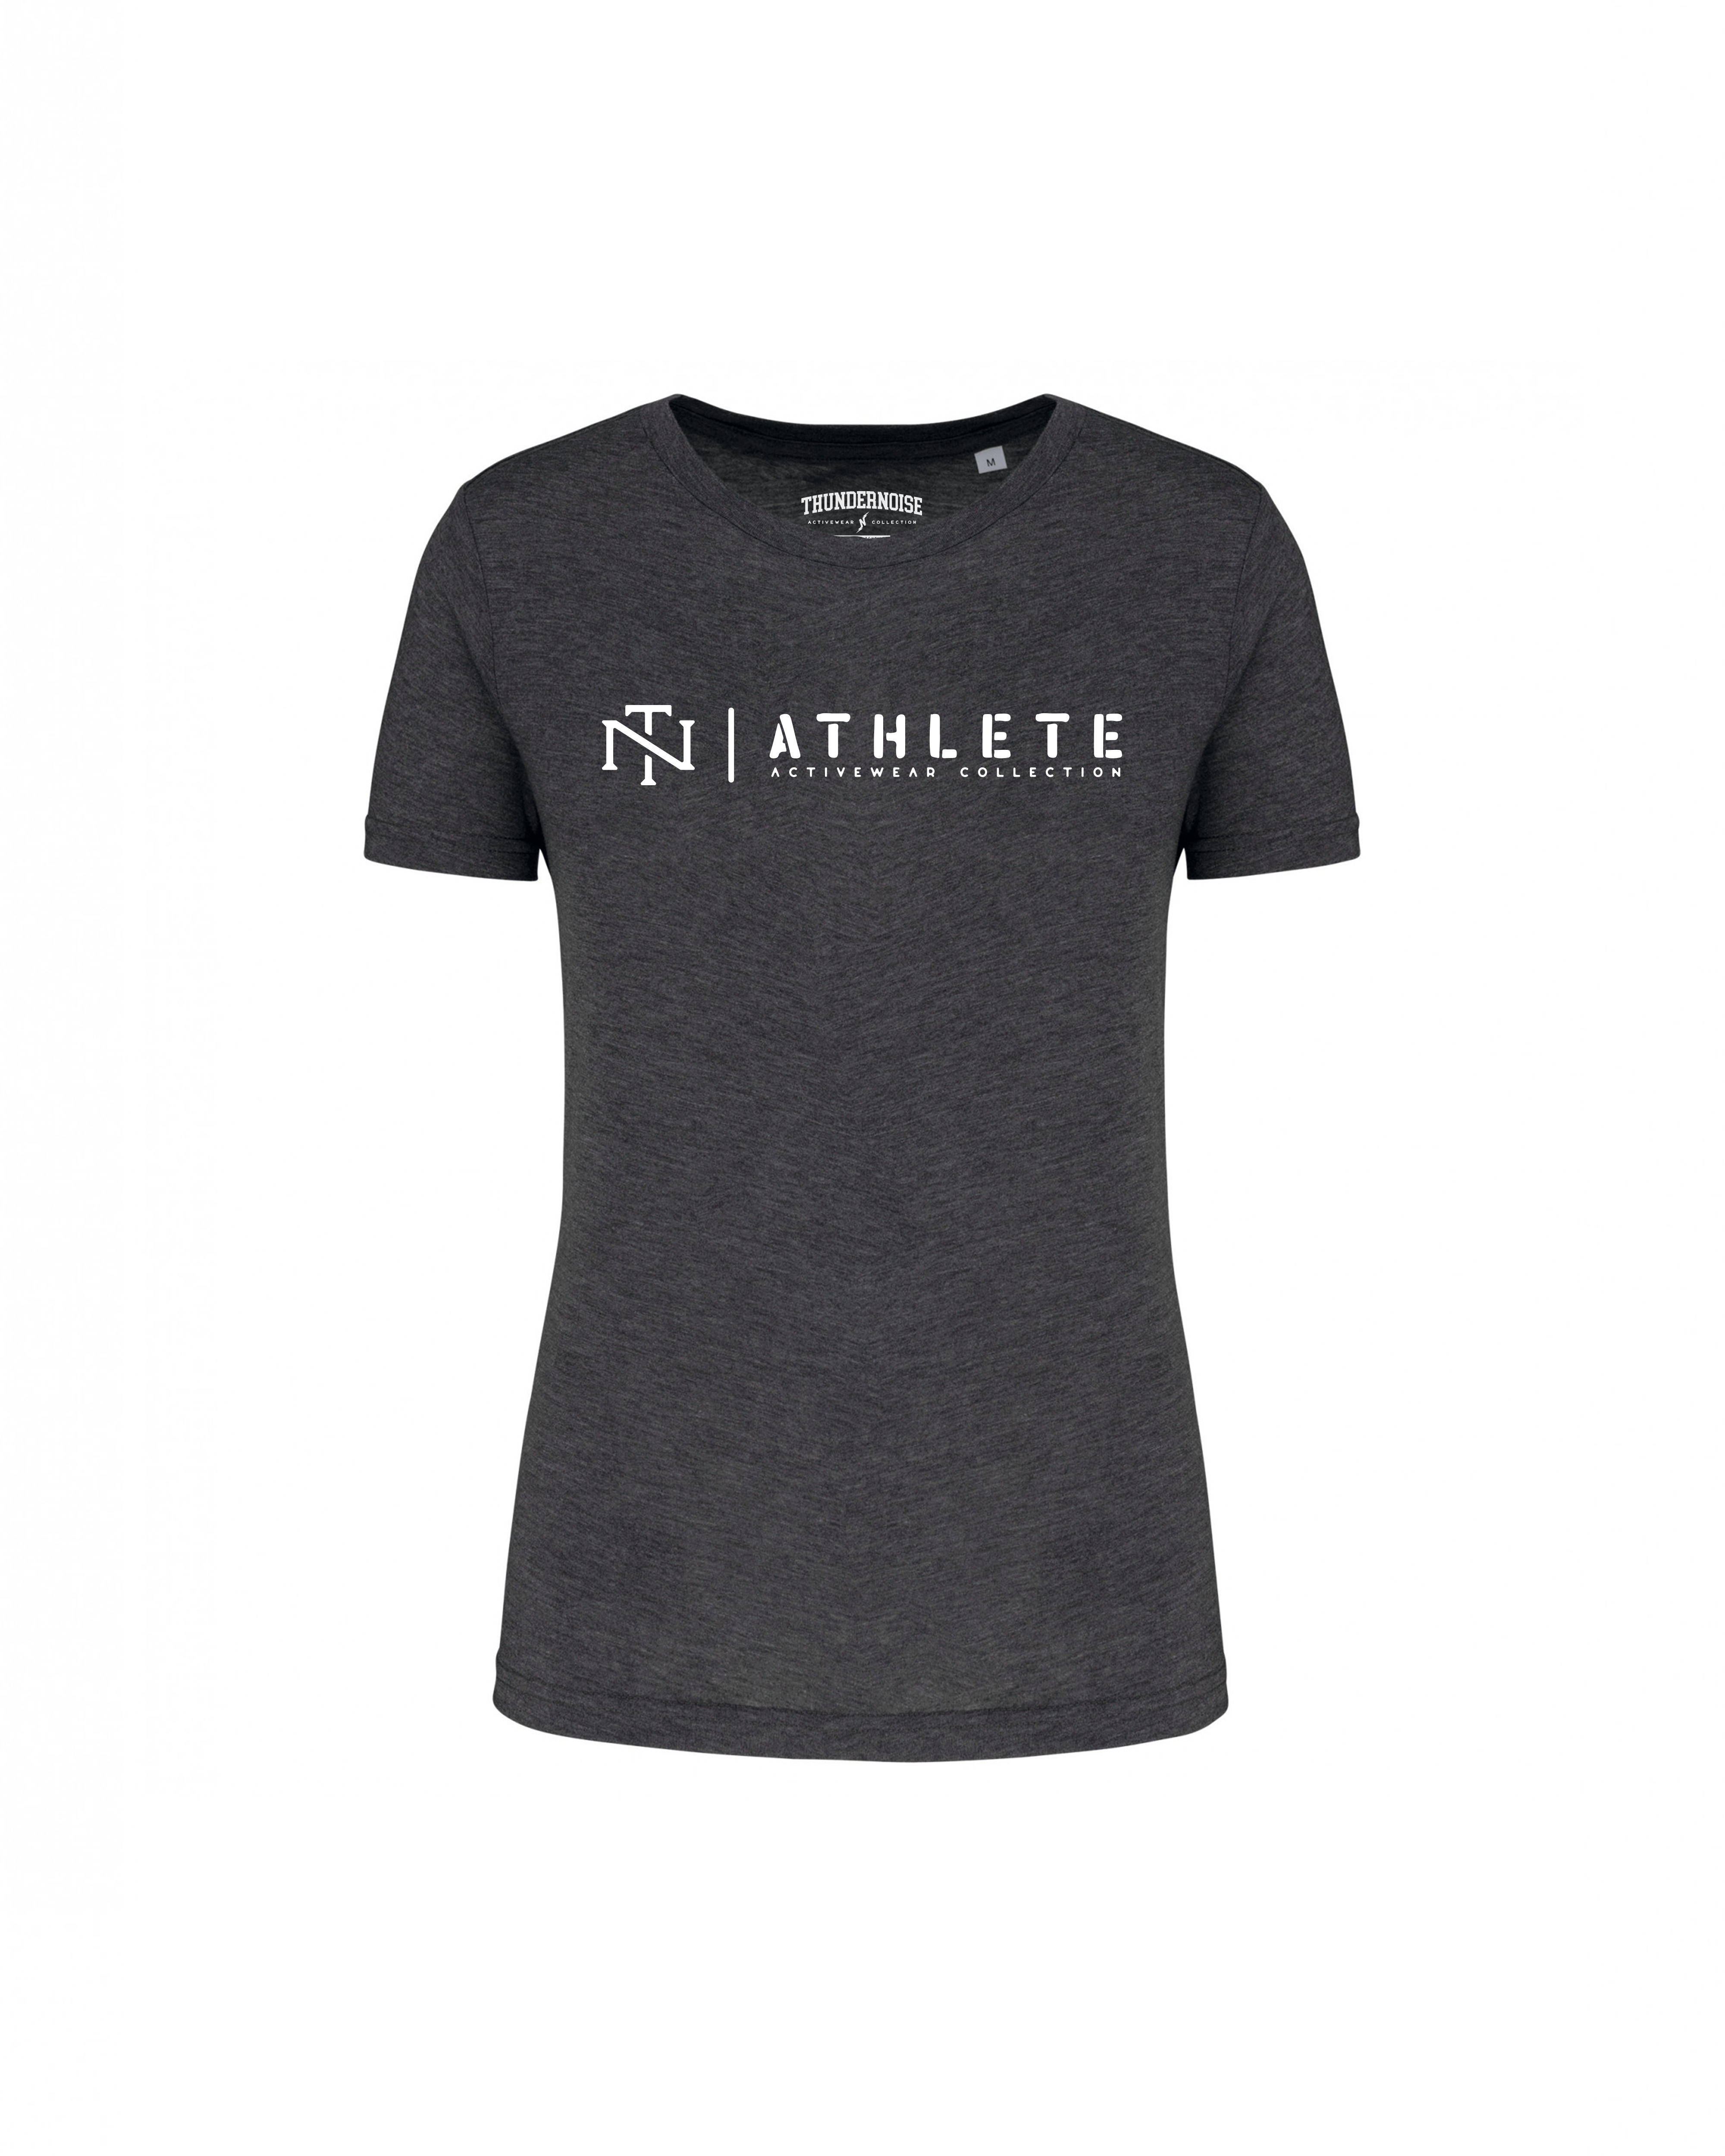 TN Athlete Triblend T-shirt - Women